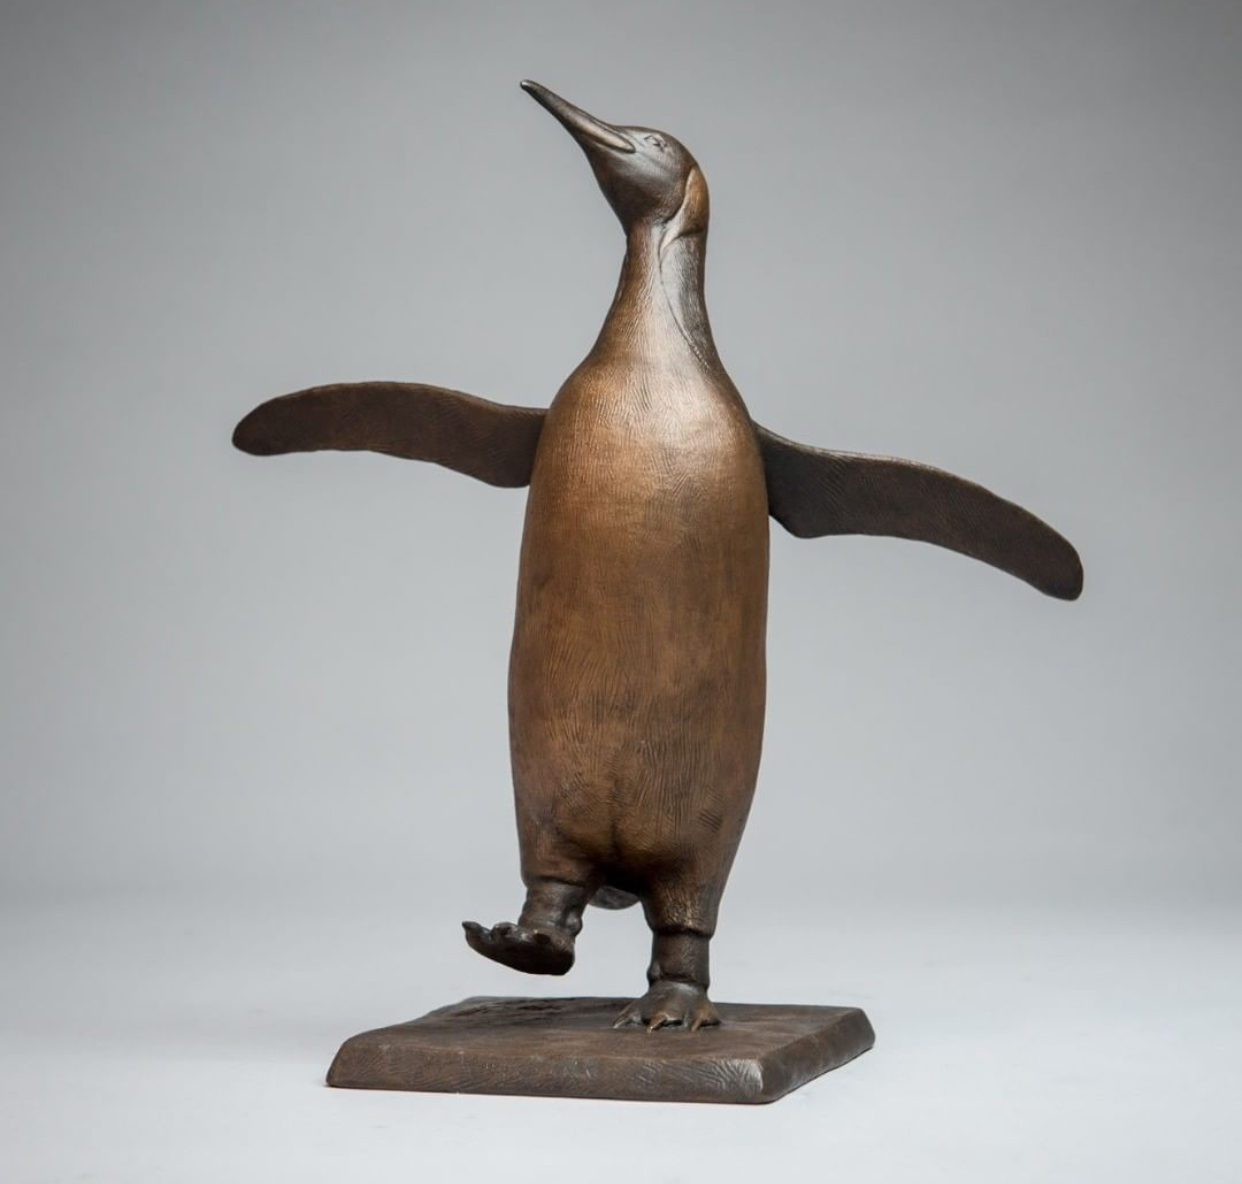 Bronze sculpture of a penguin